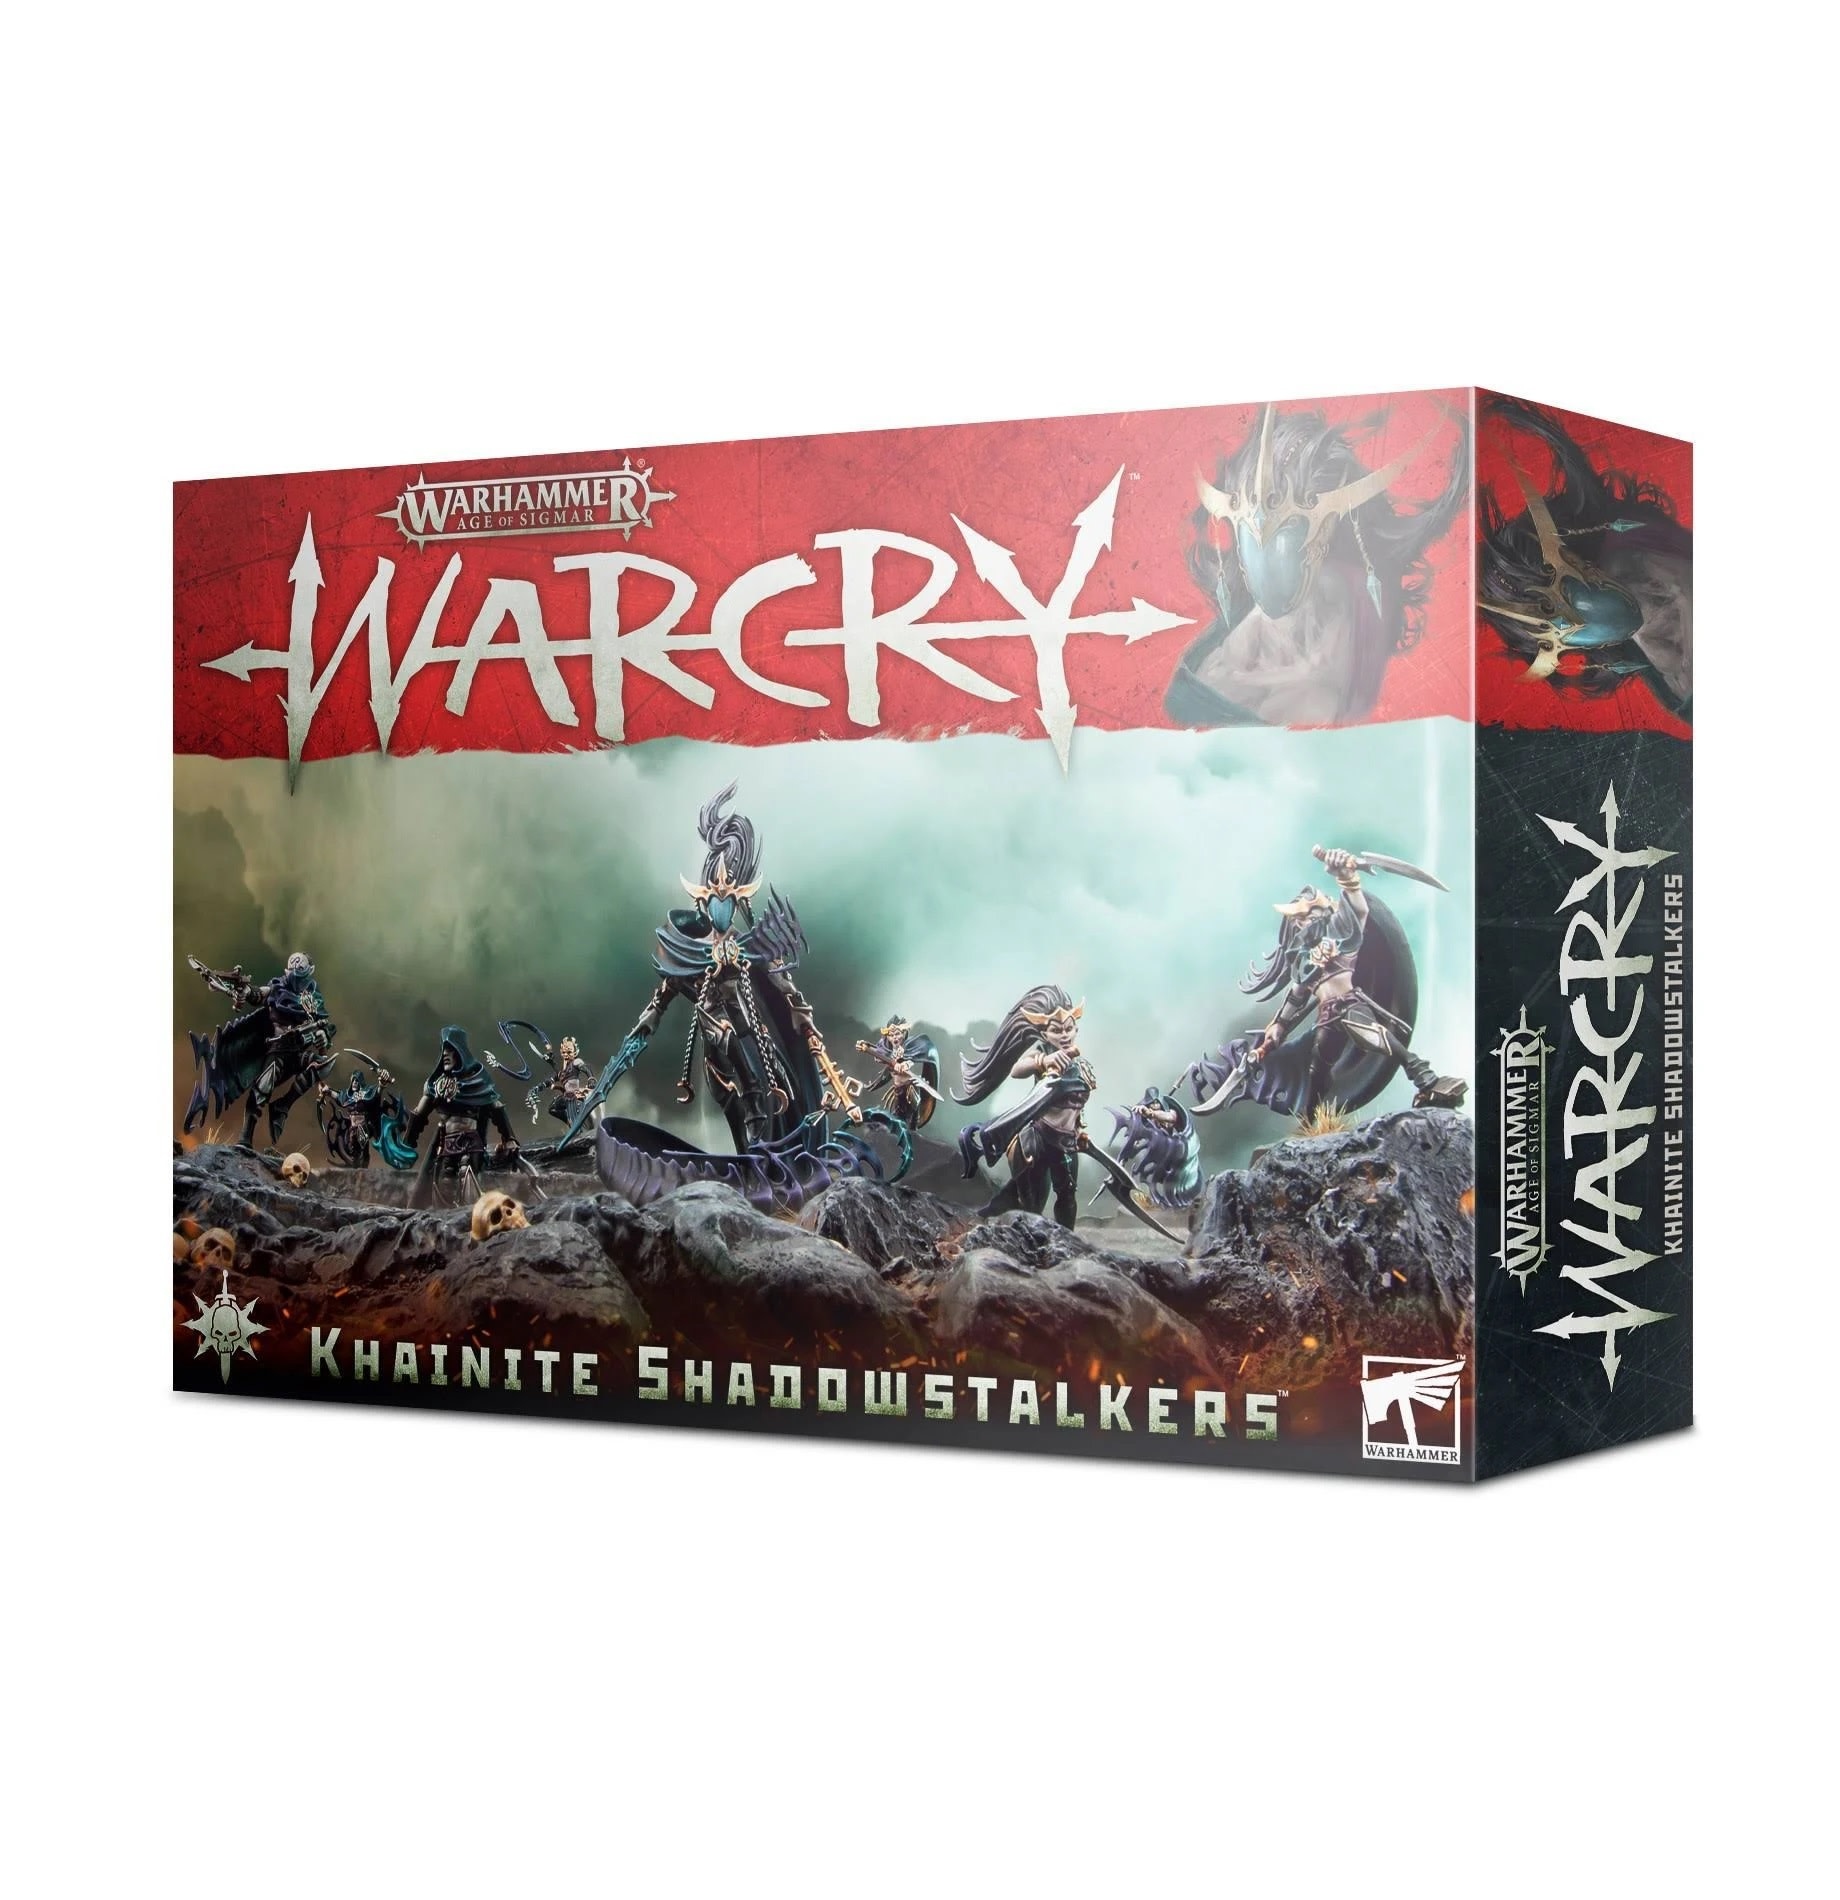 WARHAMMER: AGE OF SIGMAR: WARCRY Warhammer Age Of Sigmar Warcry: Khainite Shadowstalkers